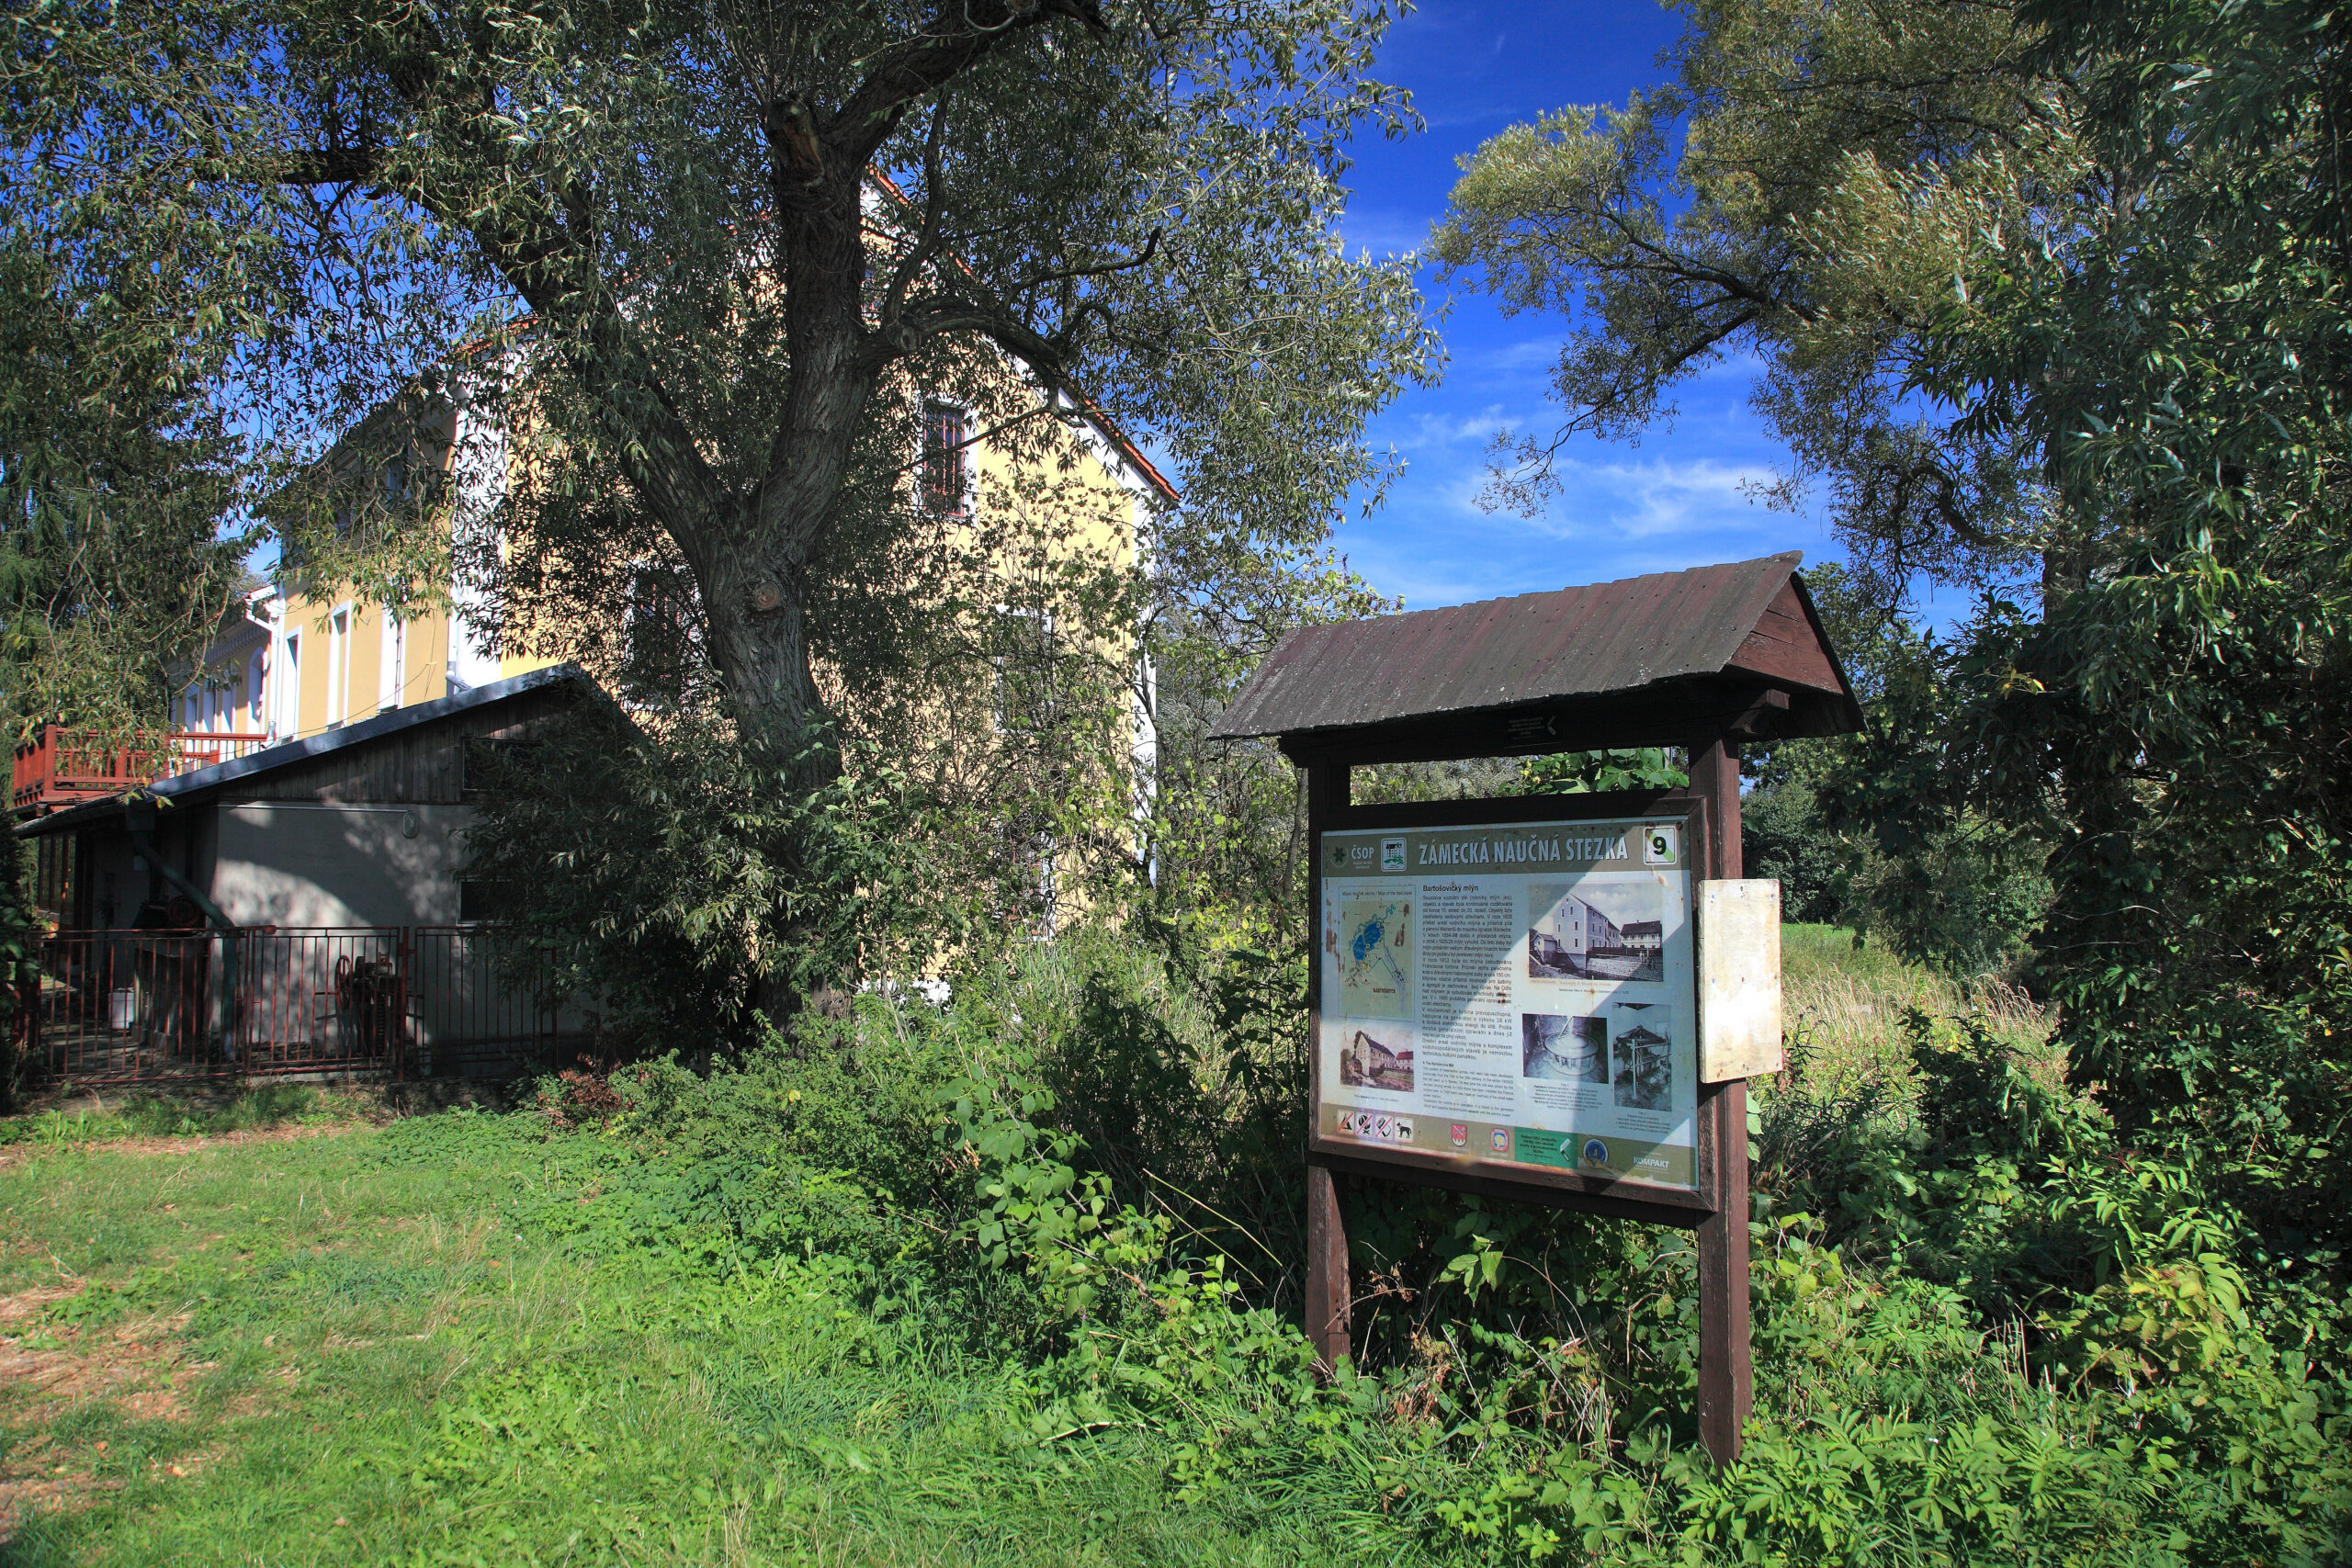 Bartošovice Mill